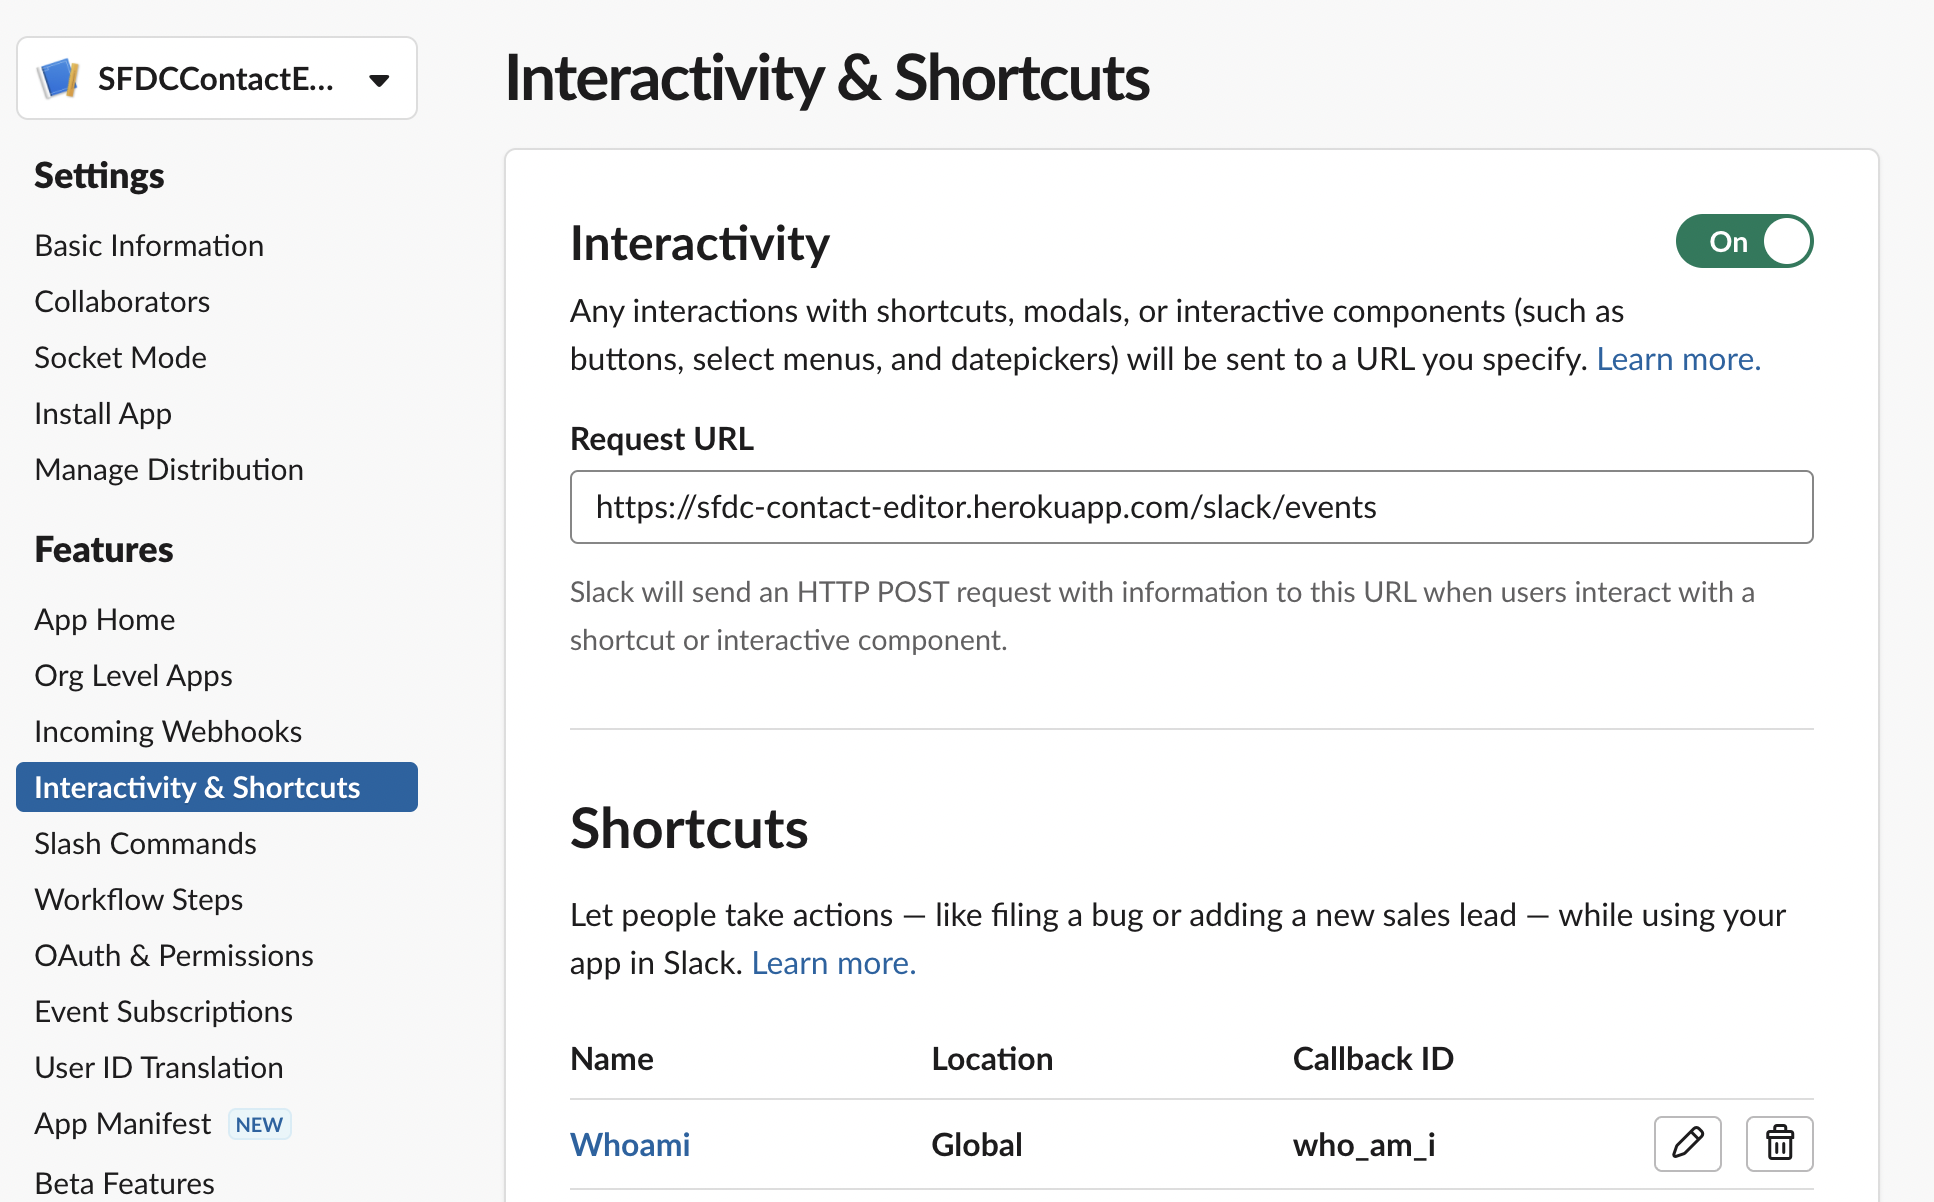 Interactivity & Shortcuts screen